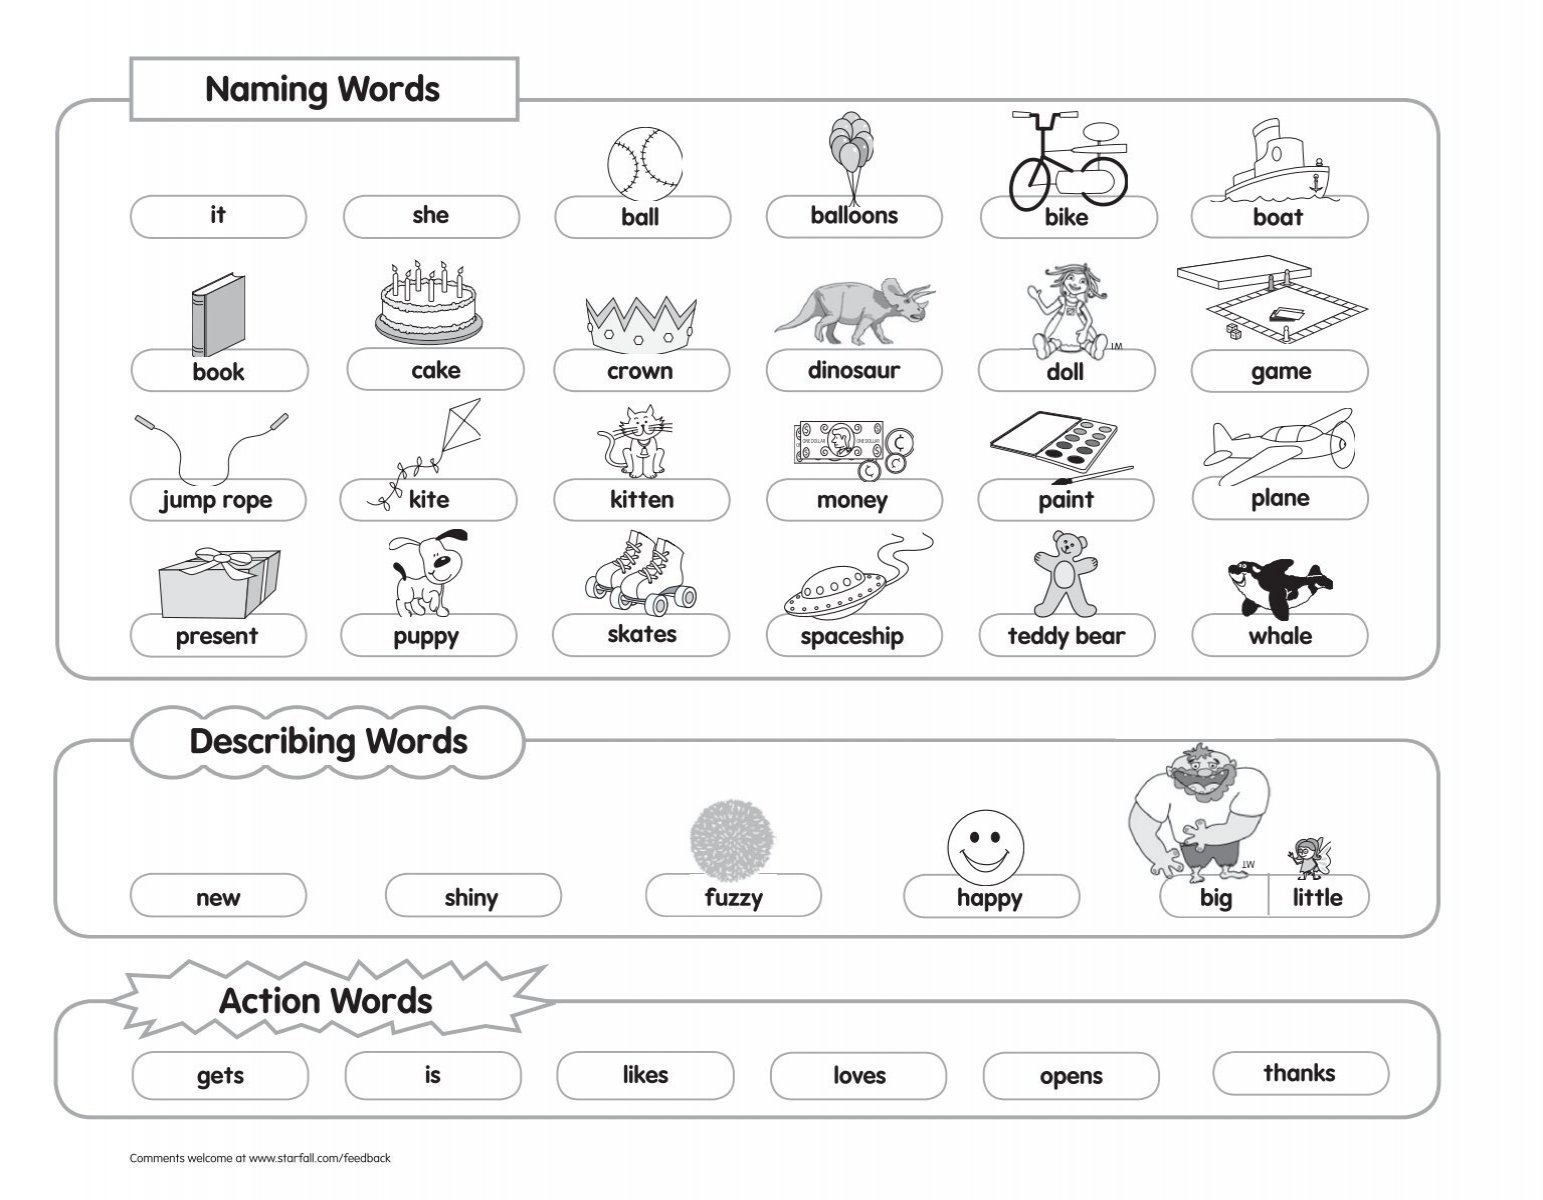 action-words-naming-words-describing-words